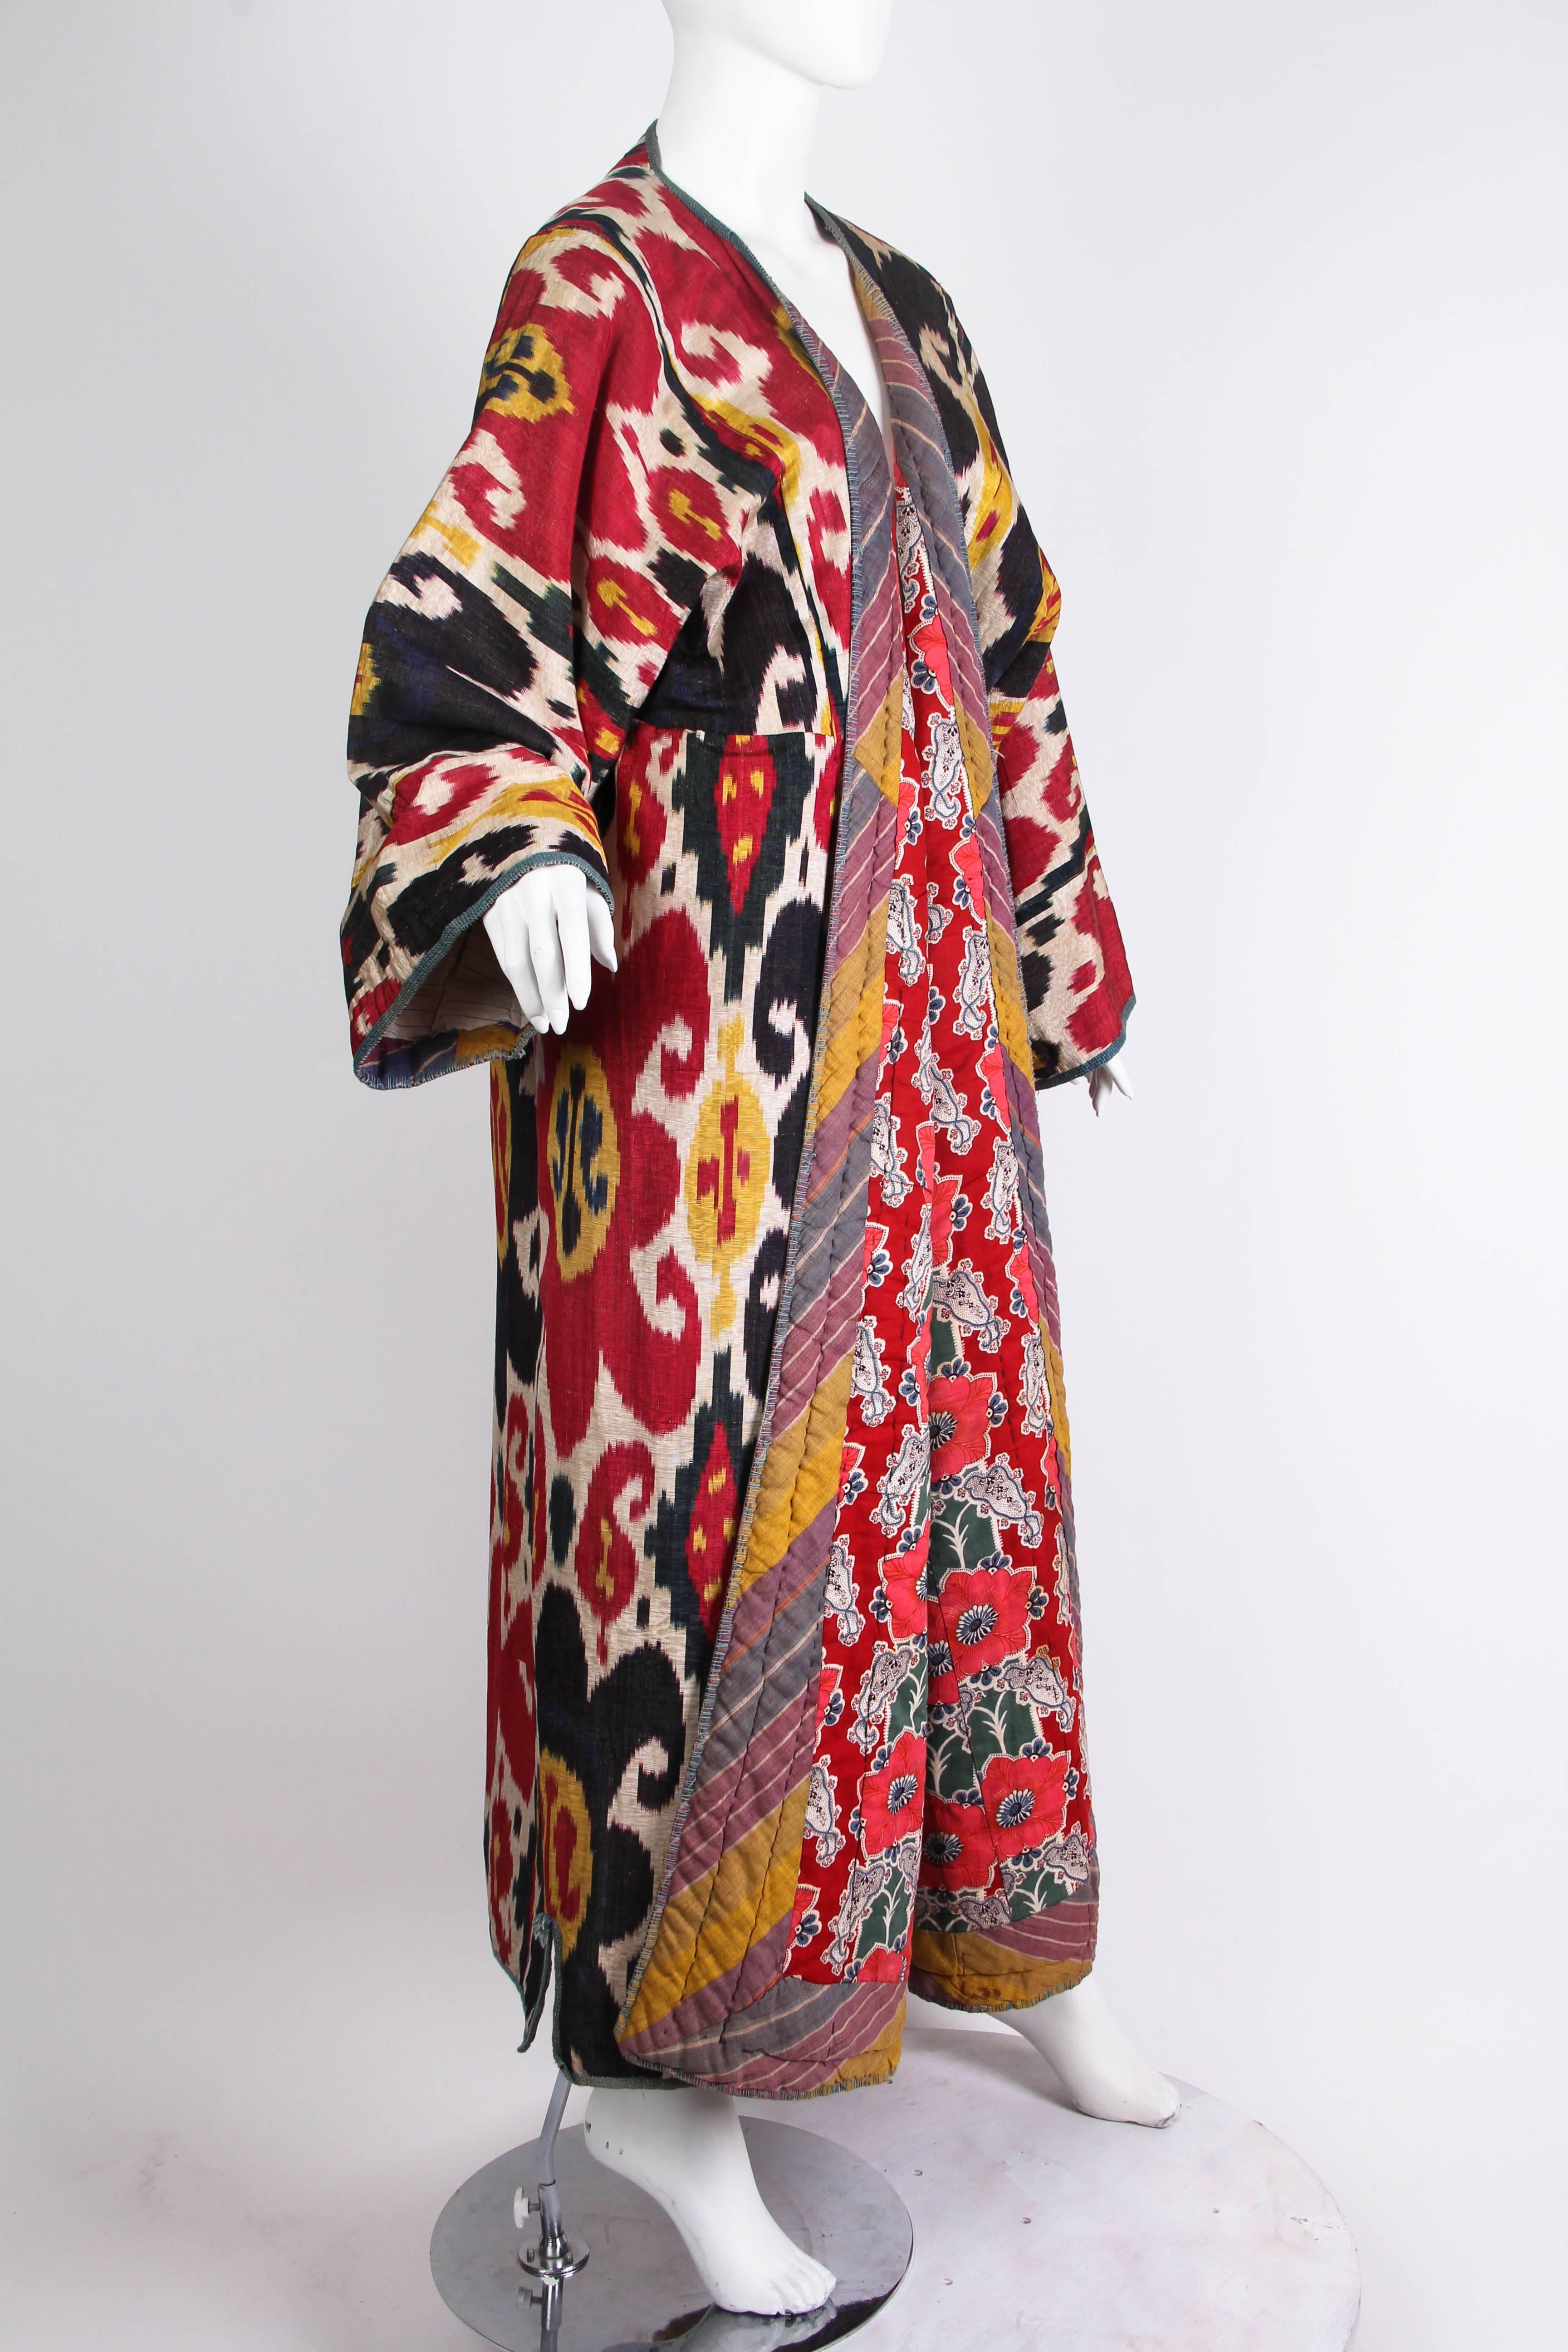 banyan robe for sale